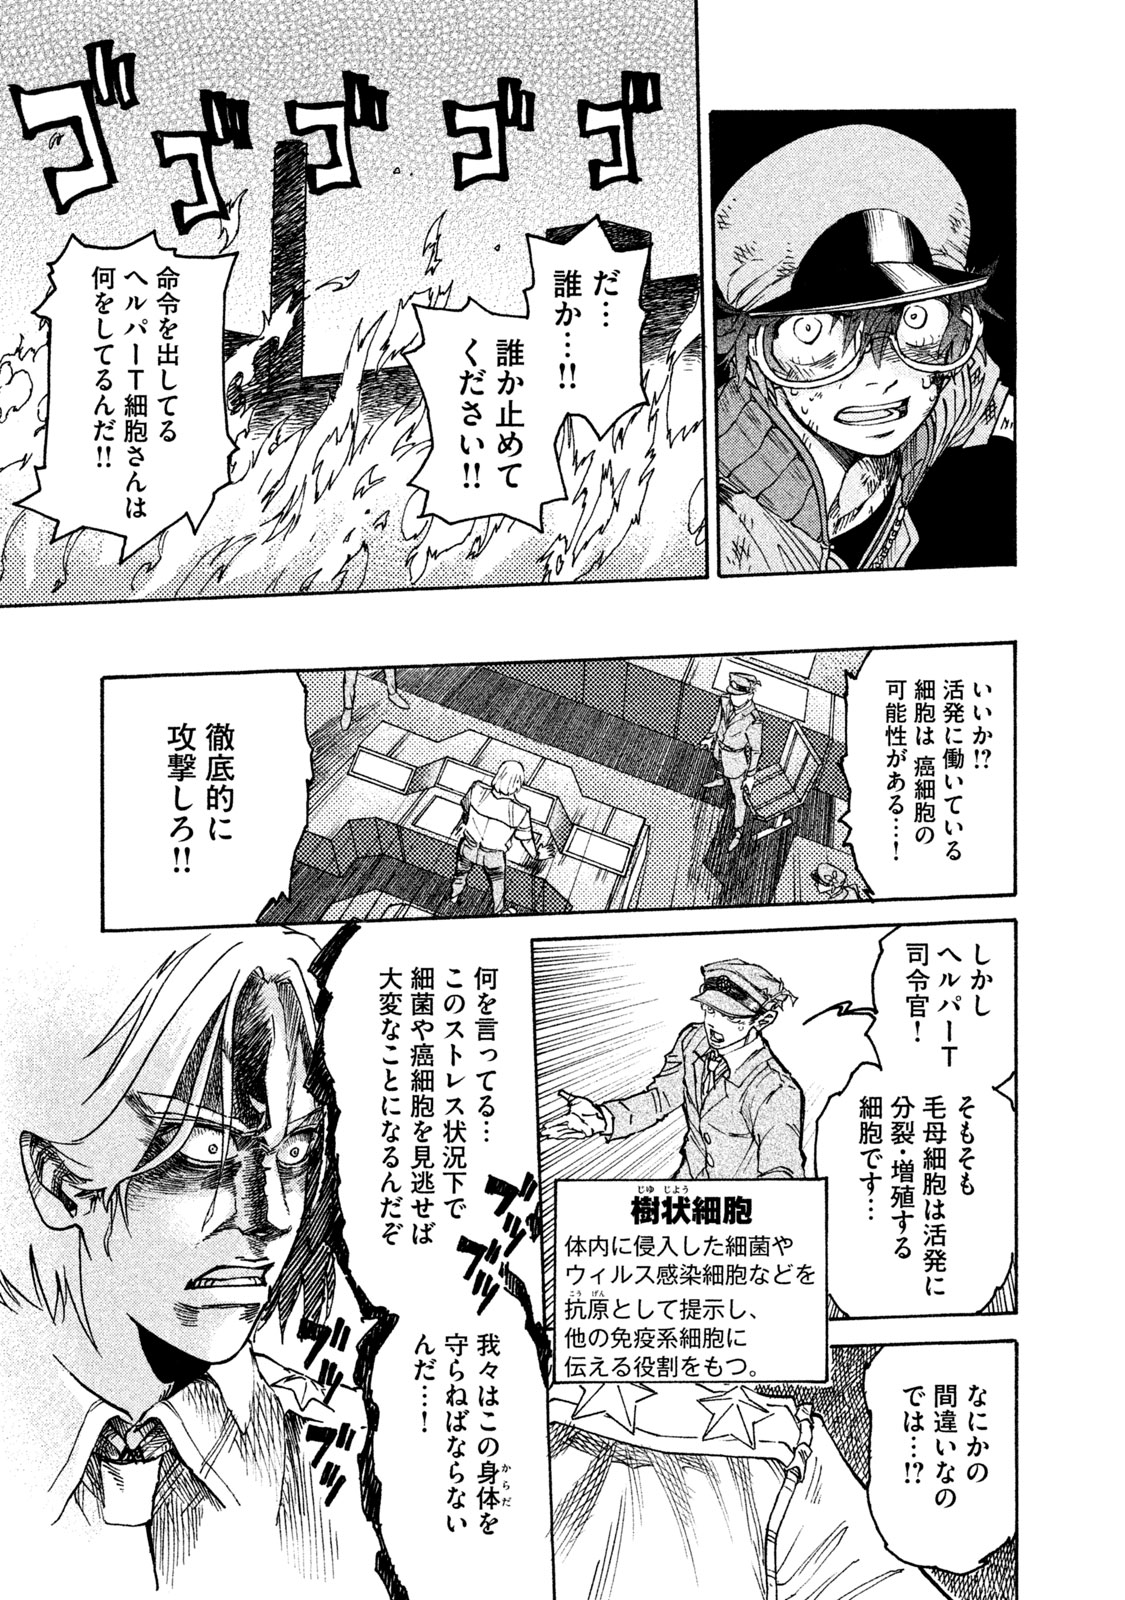 Hataraku Saibou BLACK - Chapter 5 - Page 13